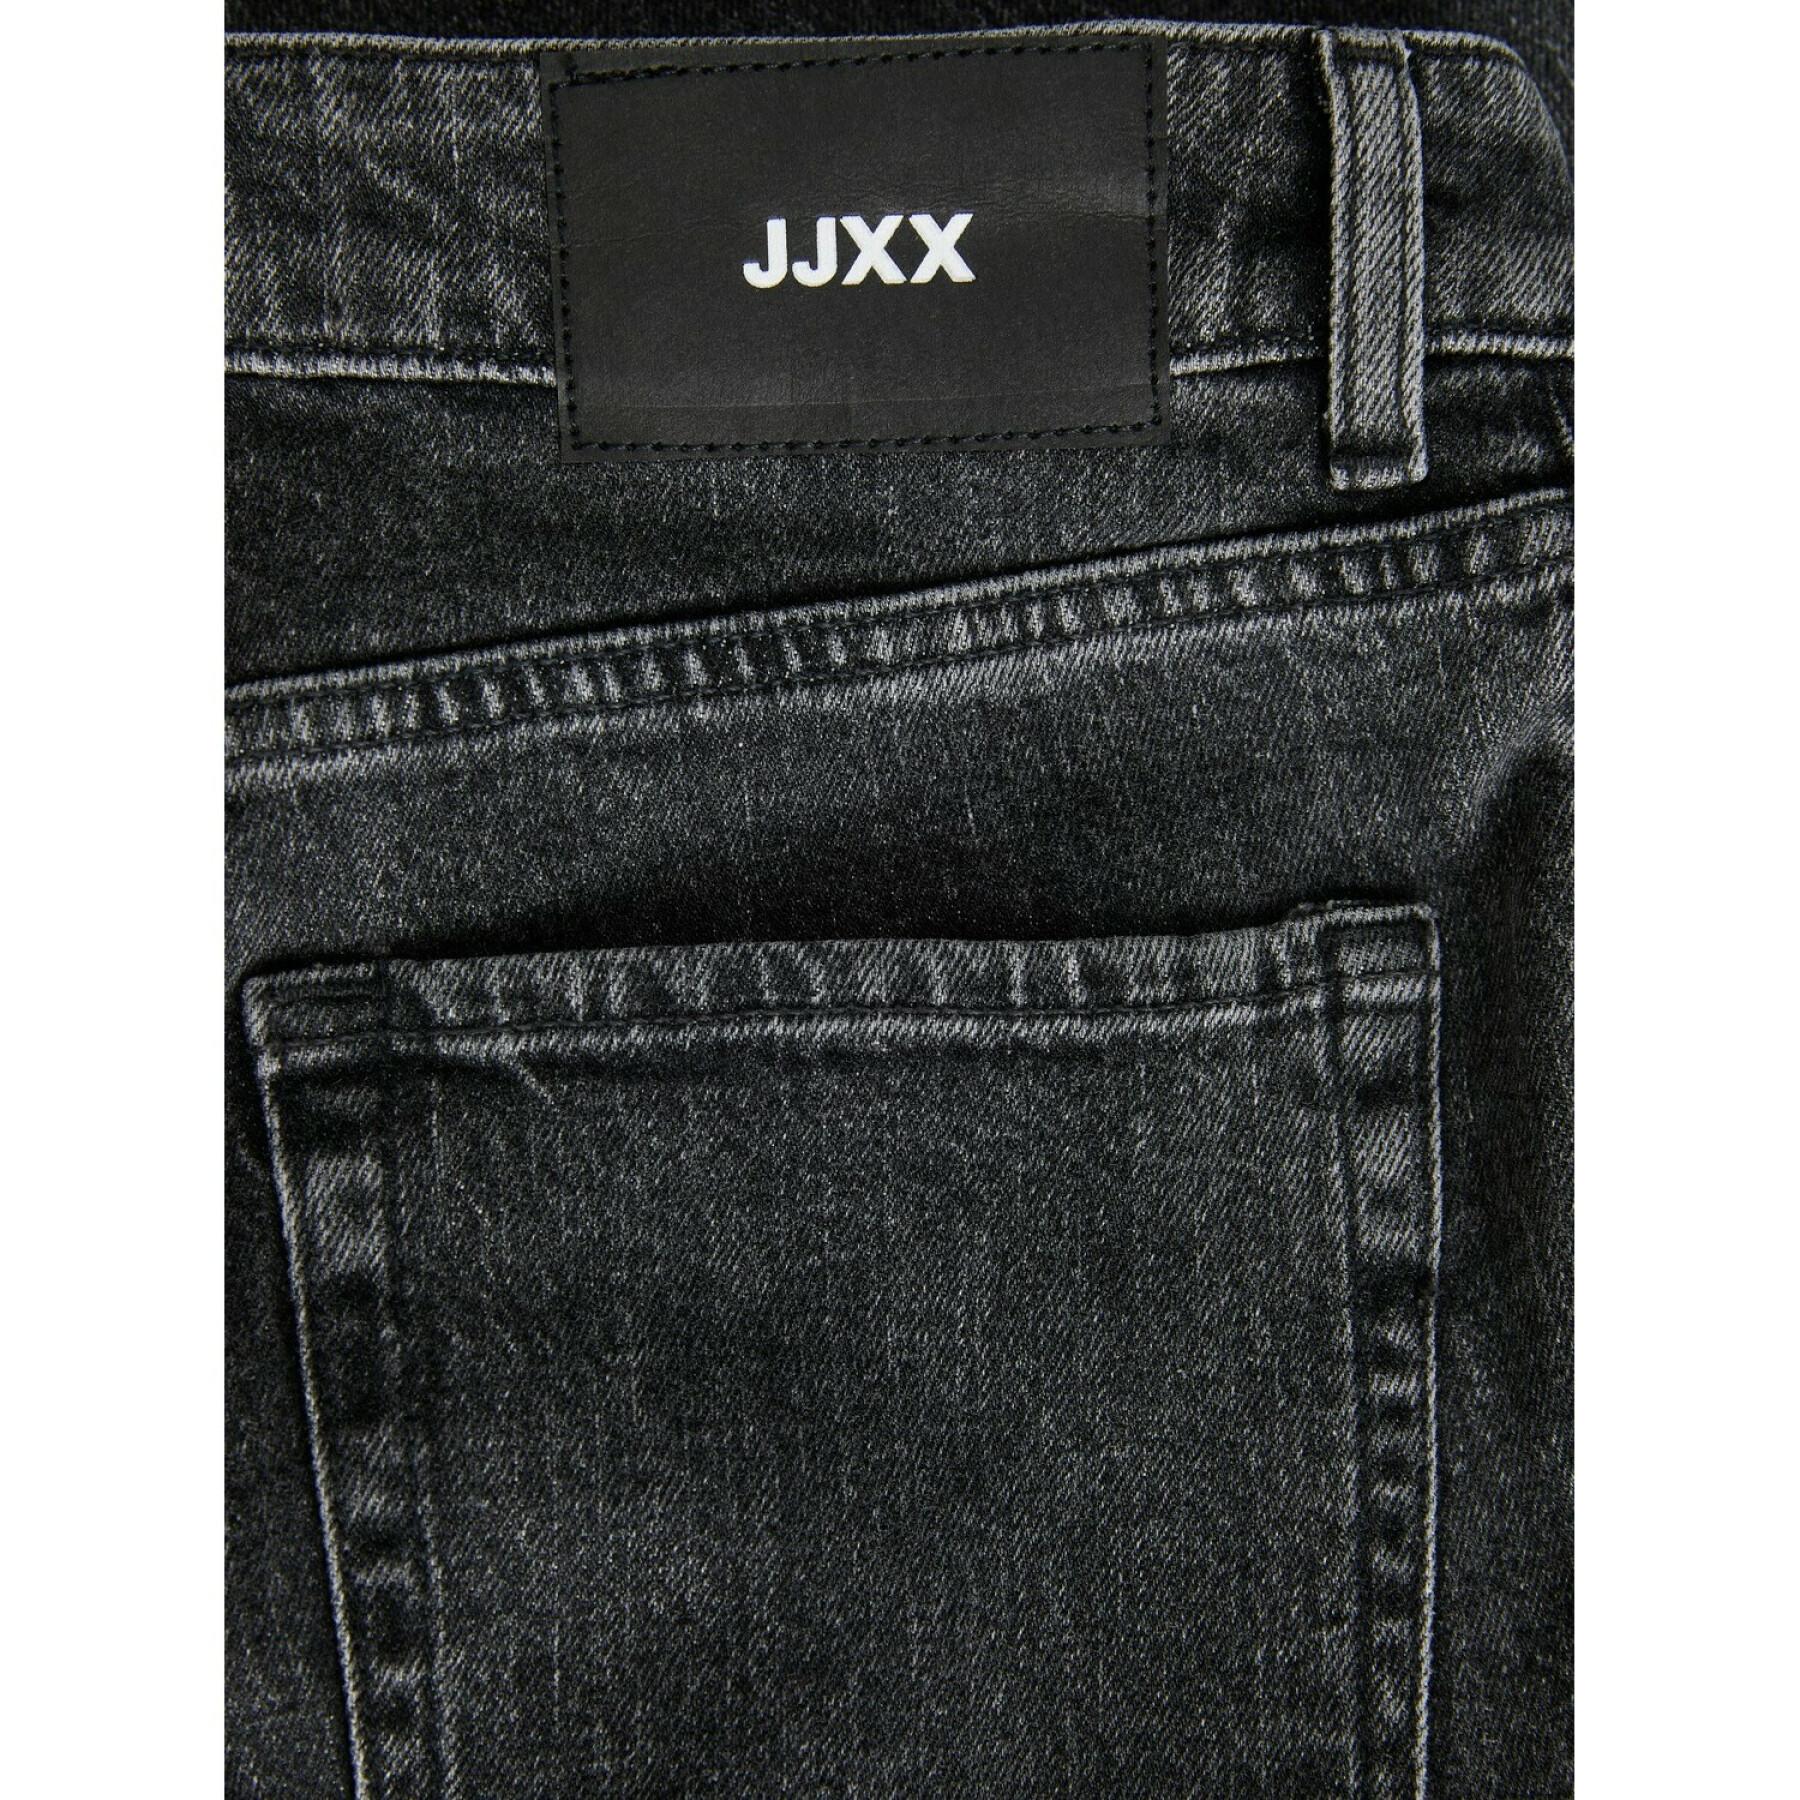 Straight Jeans Frau JJXX seoul cc3004